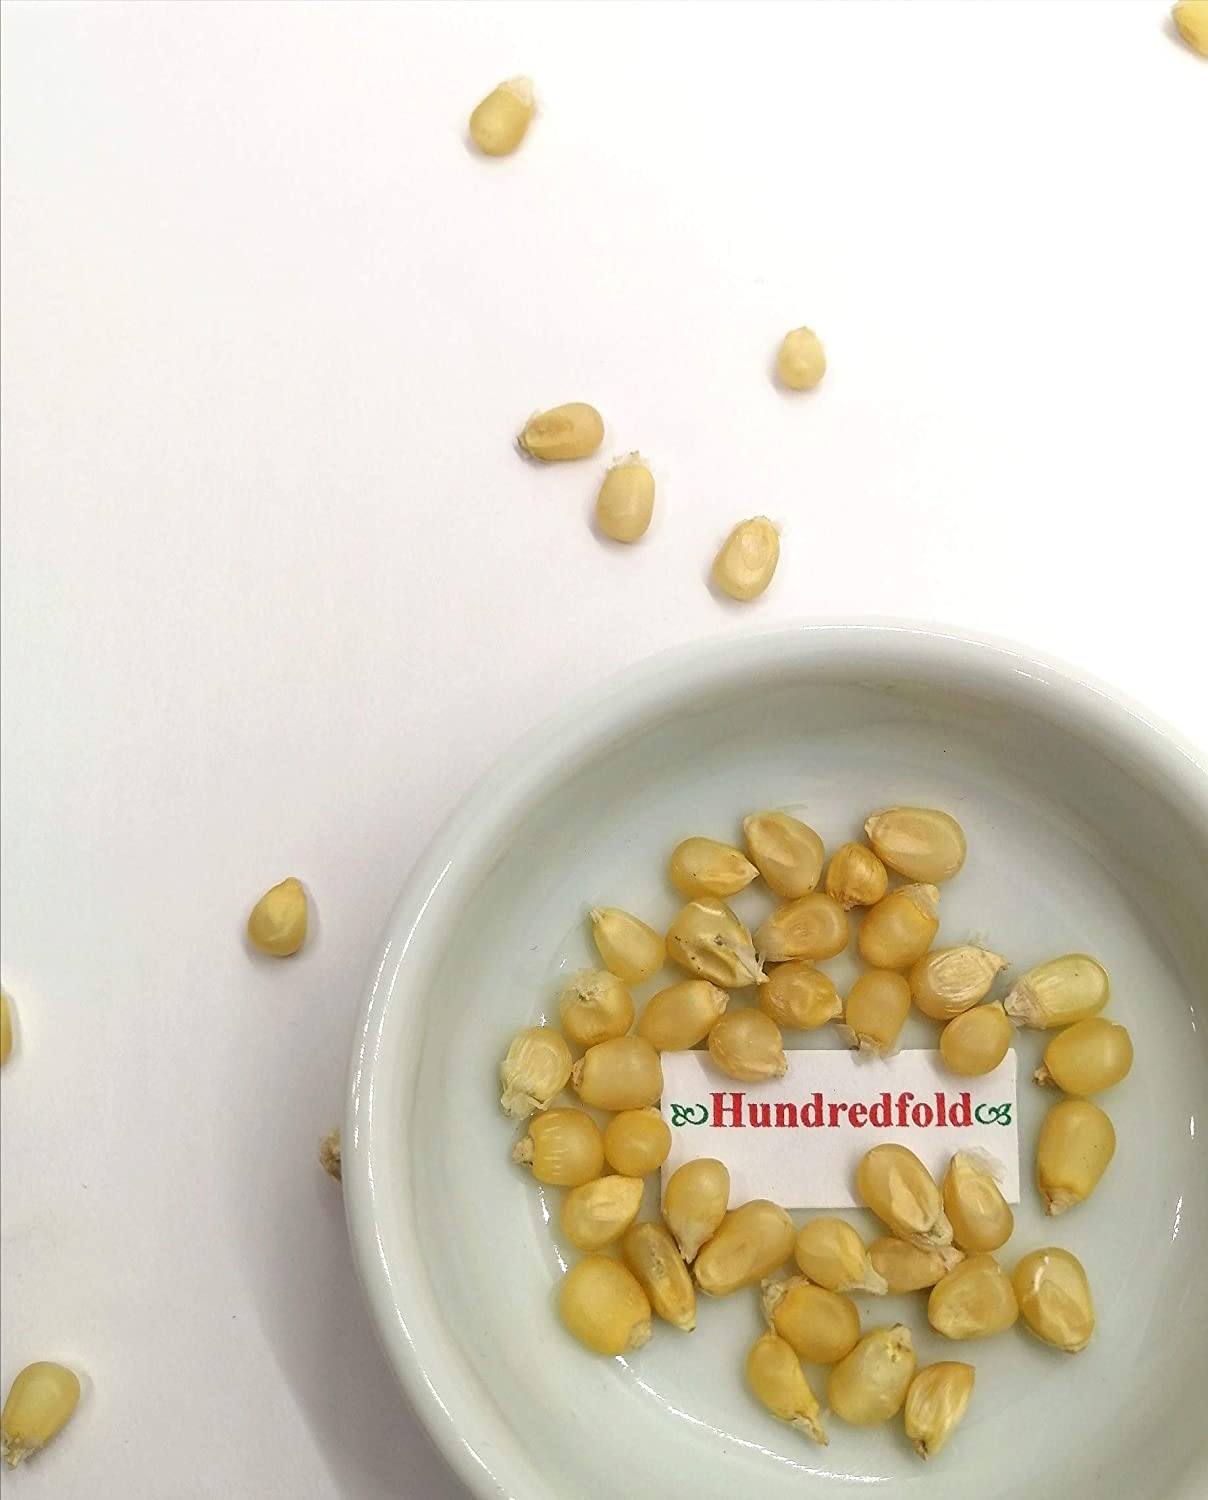 Hundredfold Pennsylvania Dutch Butter Flavored Popcorn Pop Corn100 Seeds - Zea mays Non-GMO Heirloom Pre-1885 Variety